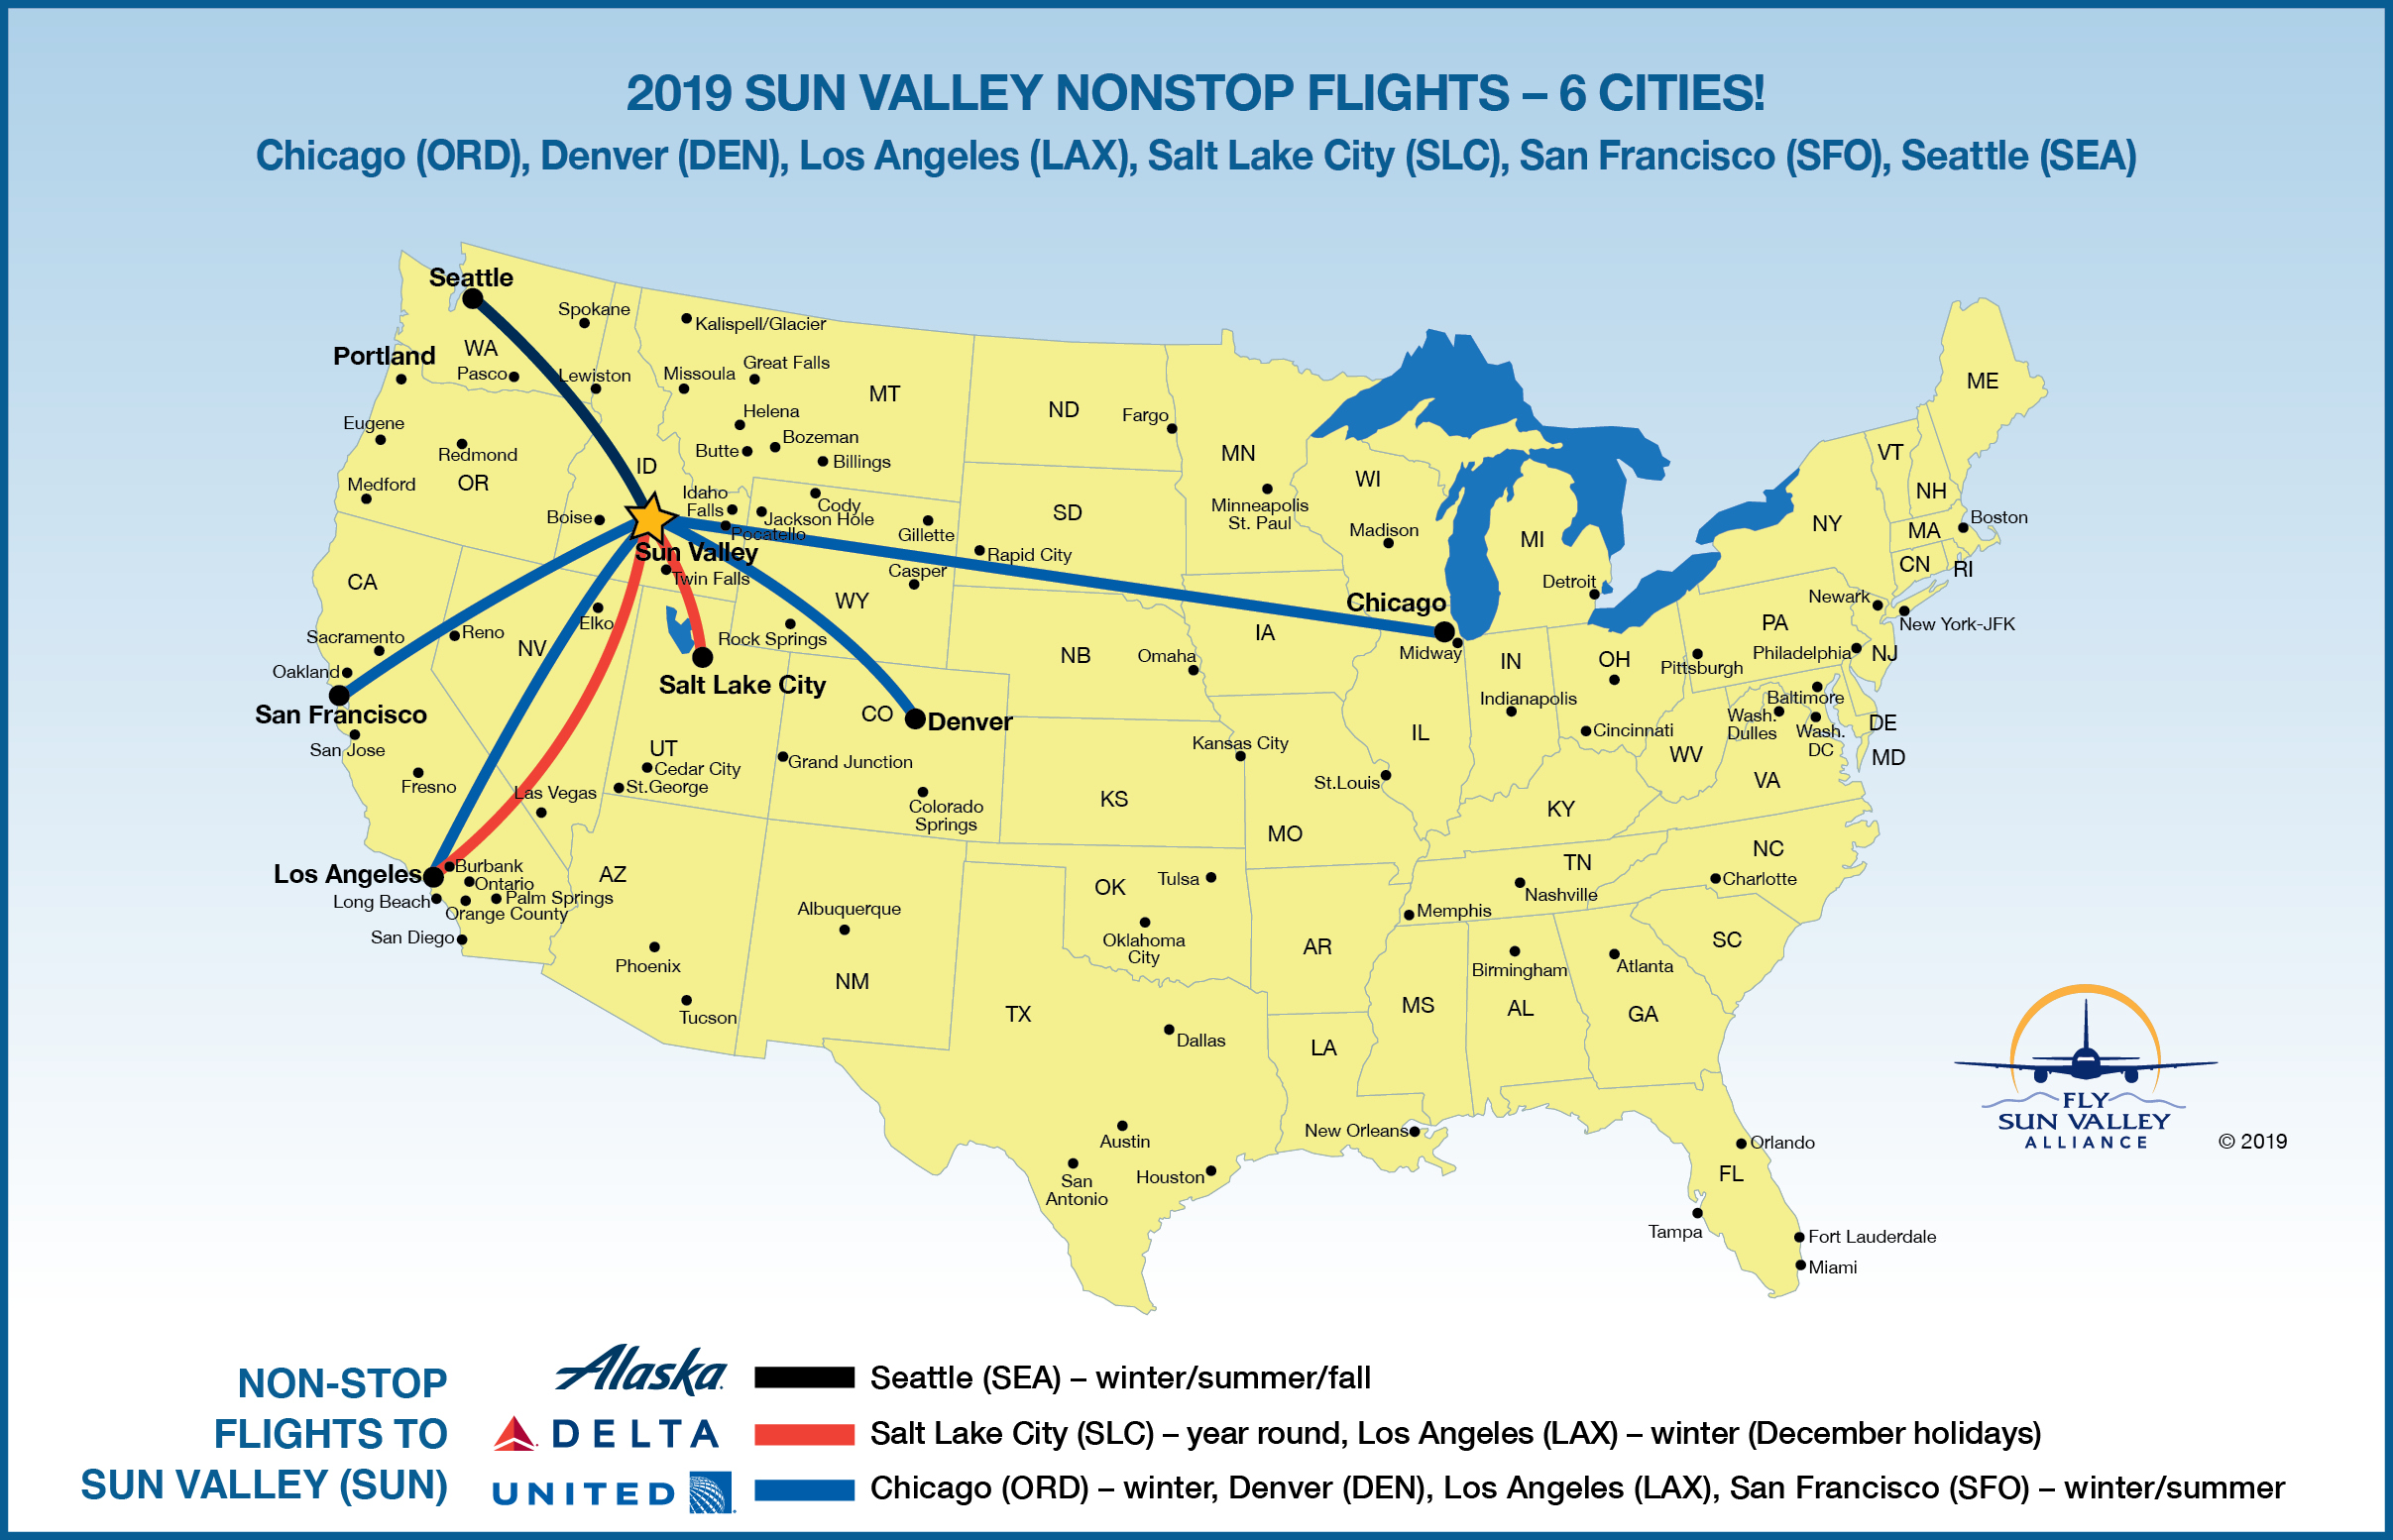 Valley Nonstop Flight Access Winter 2019/20 Season” -